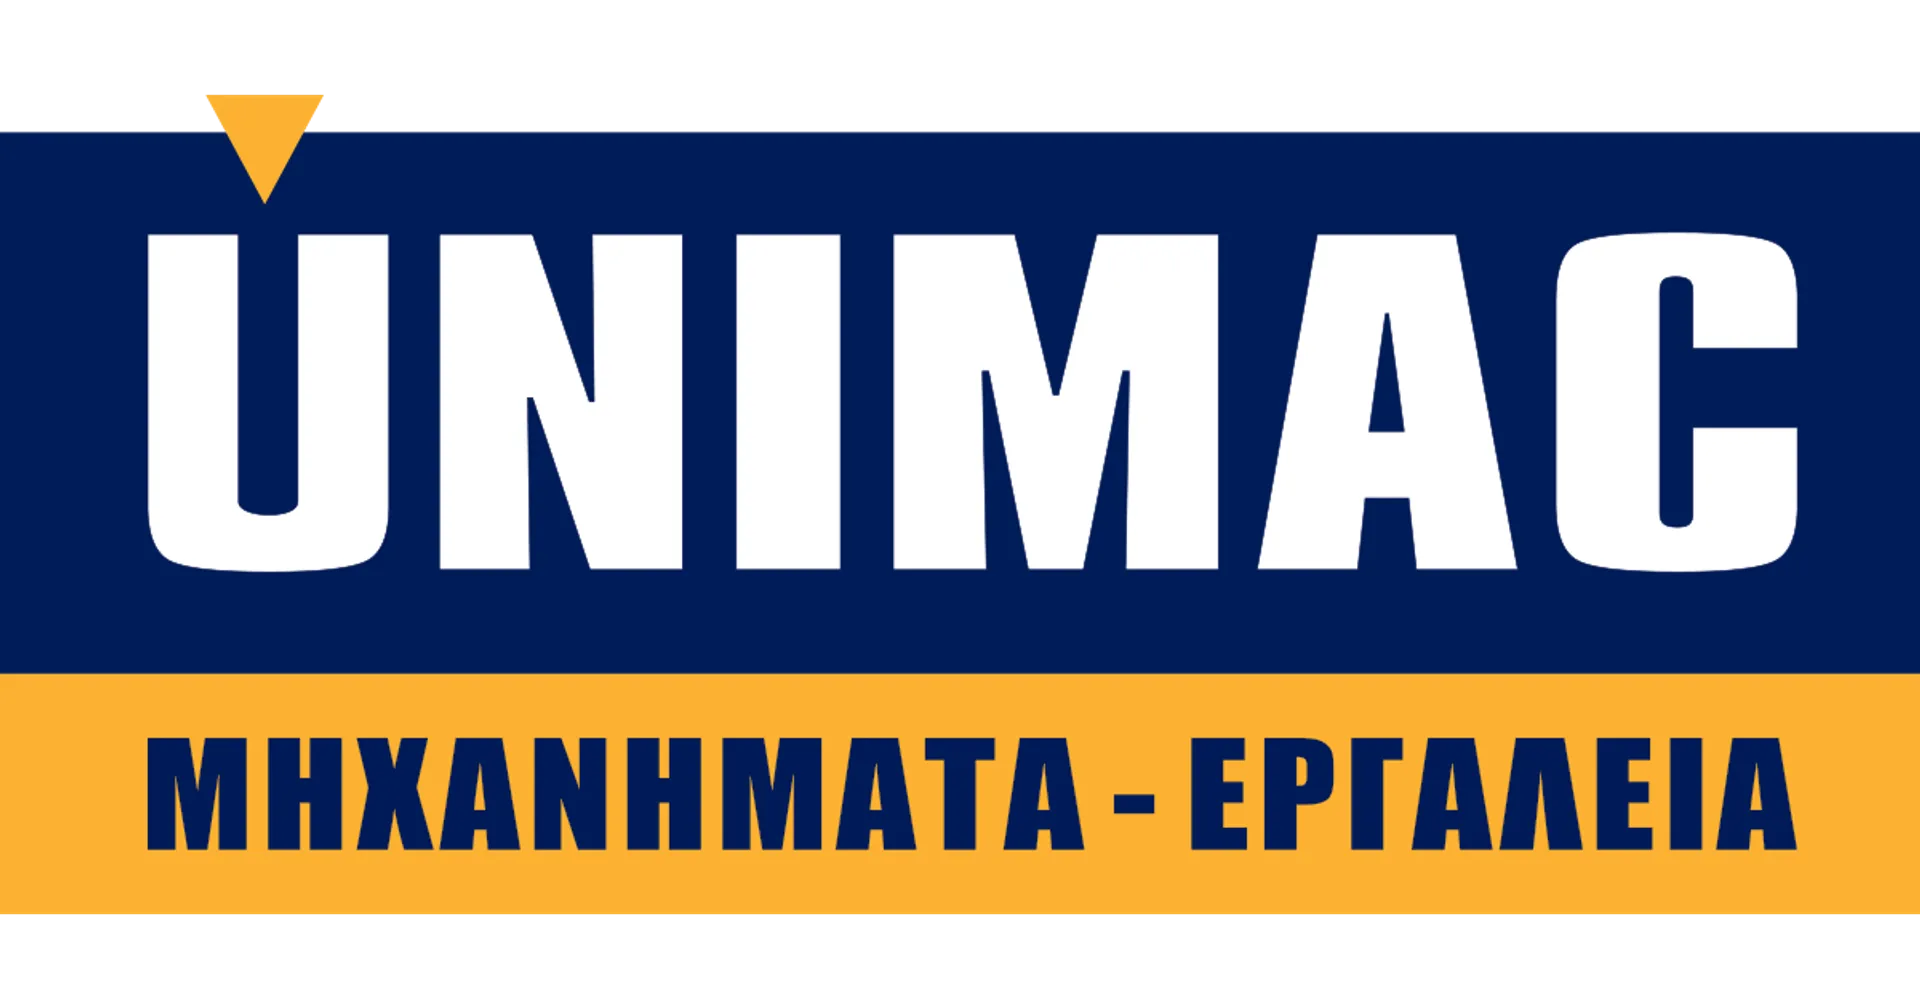 UNIMAC logo